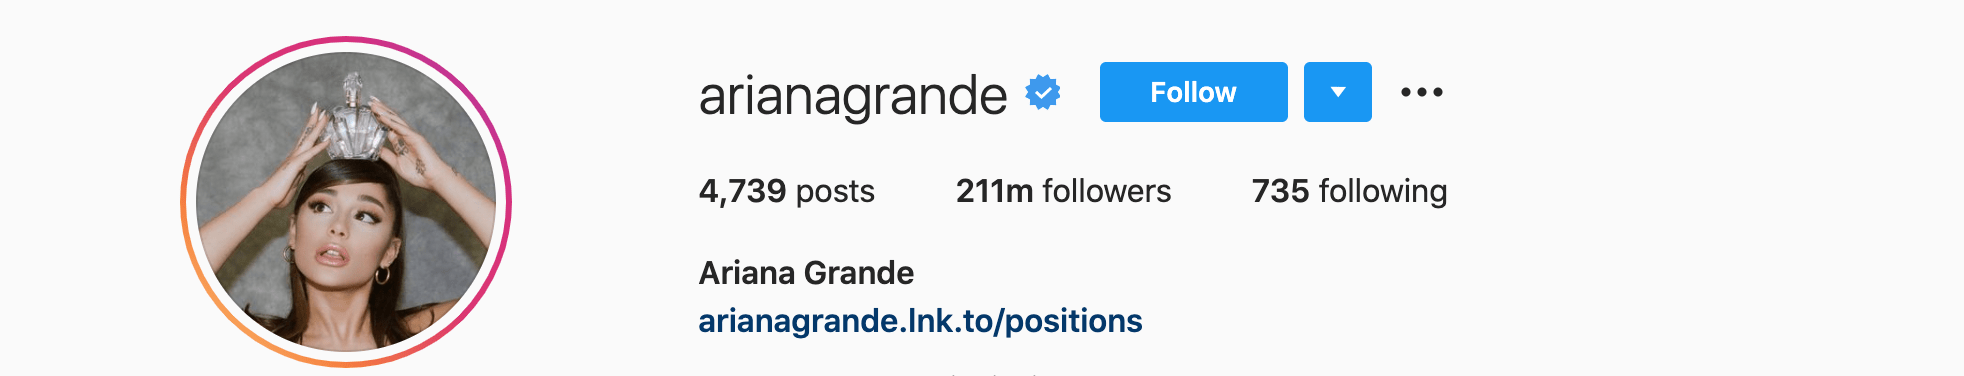 Top Instagram Influencers - ARIANA GRANDE